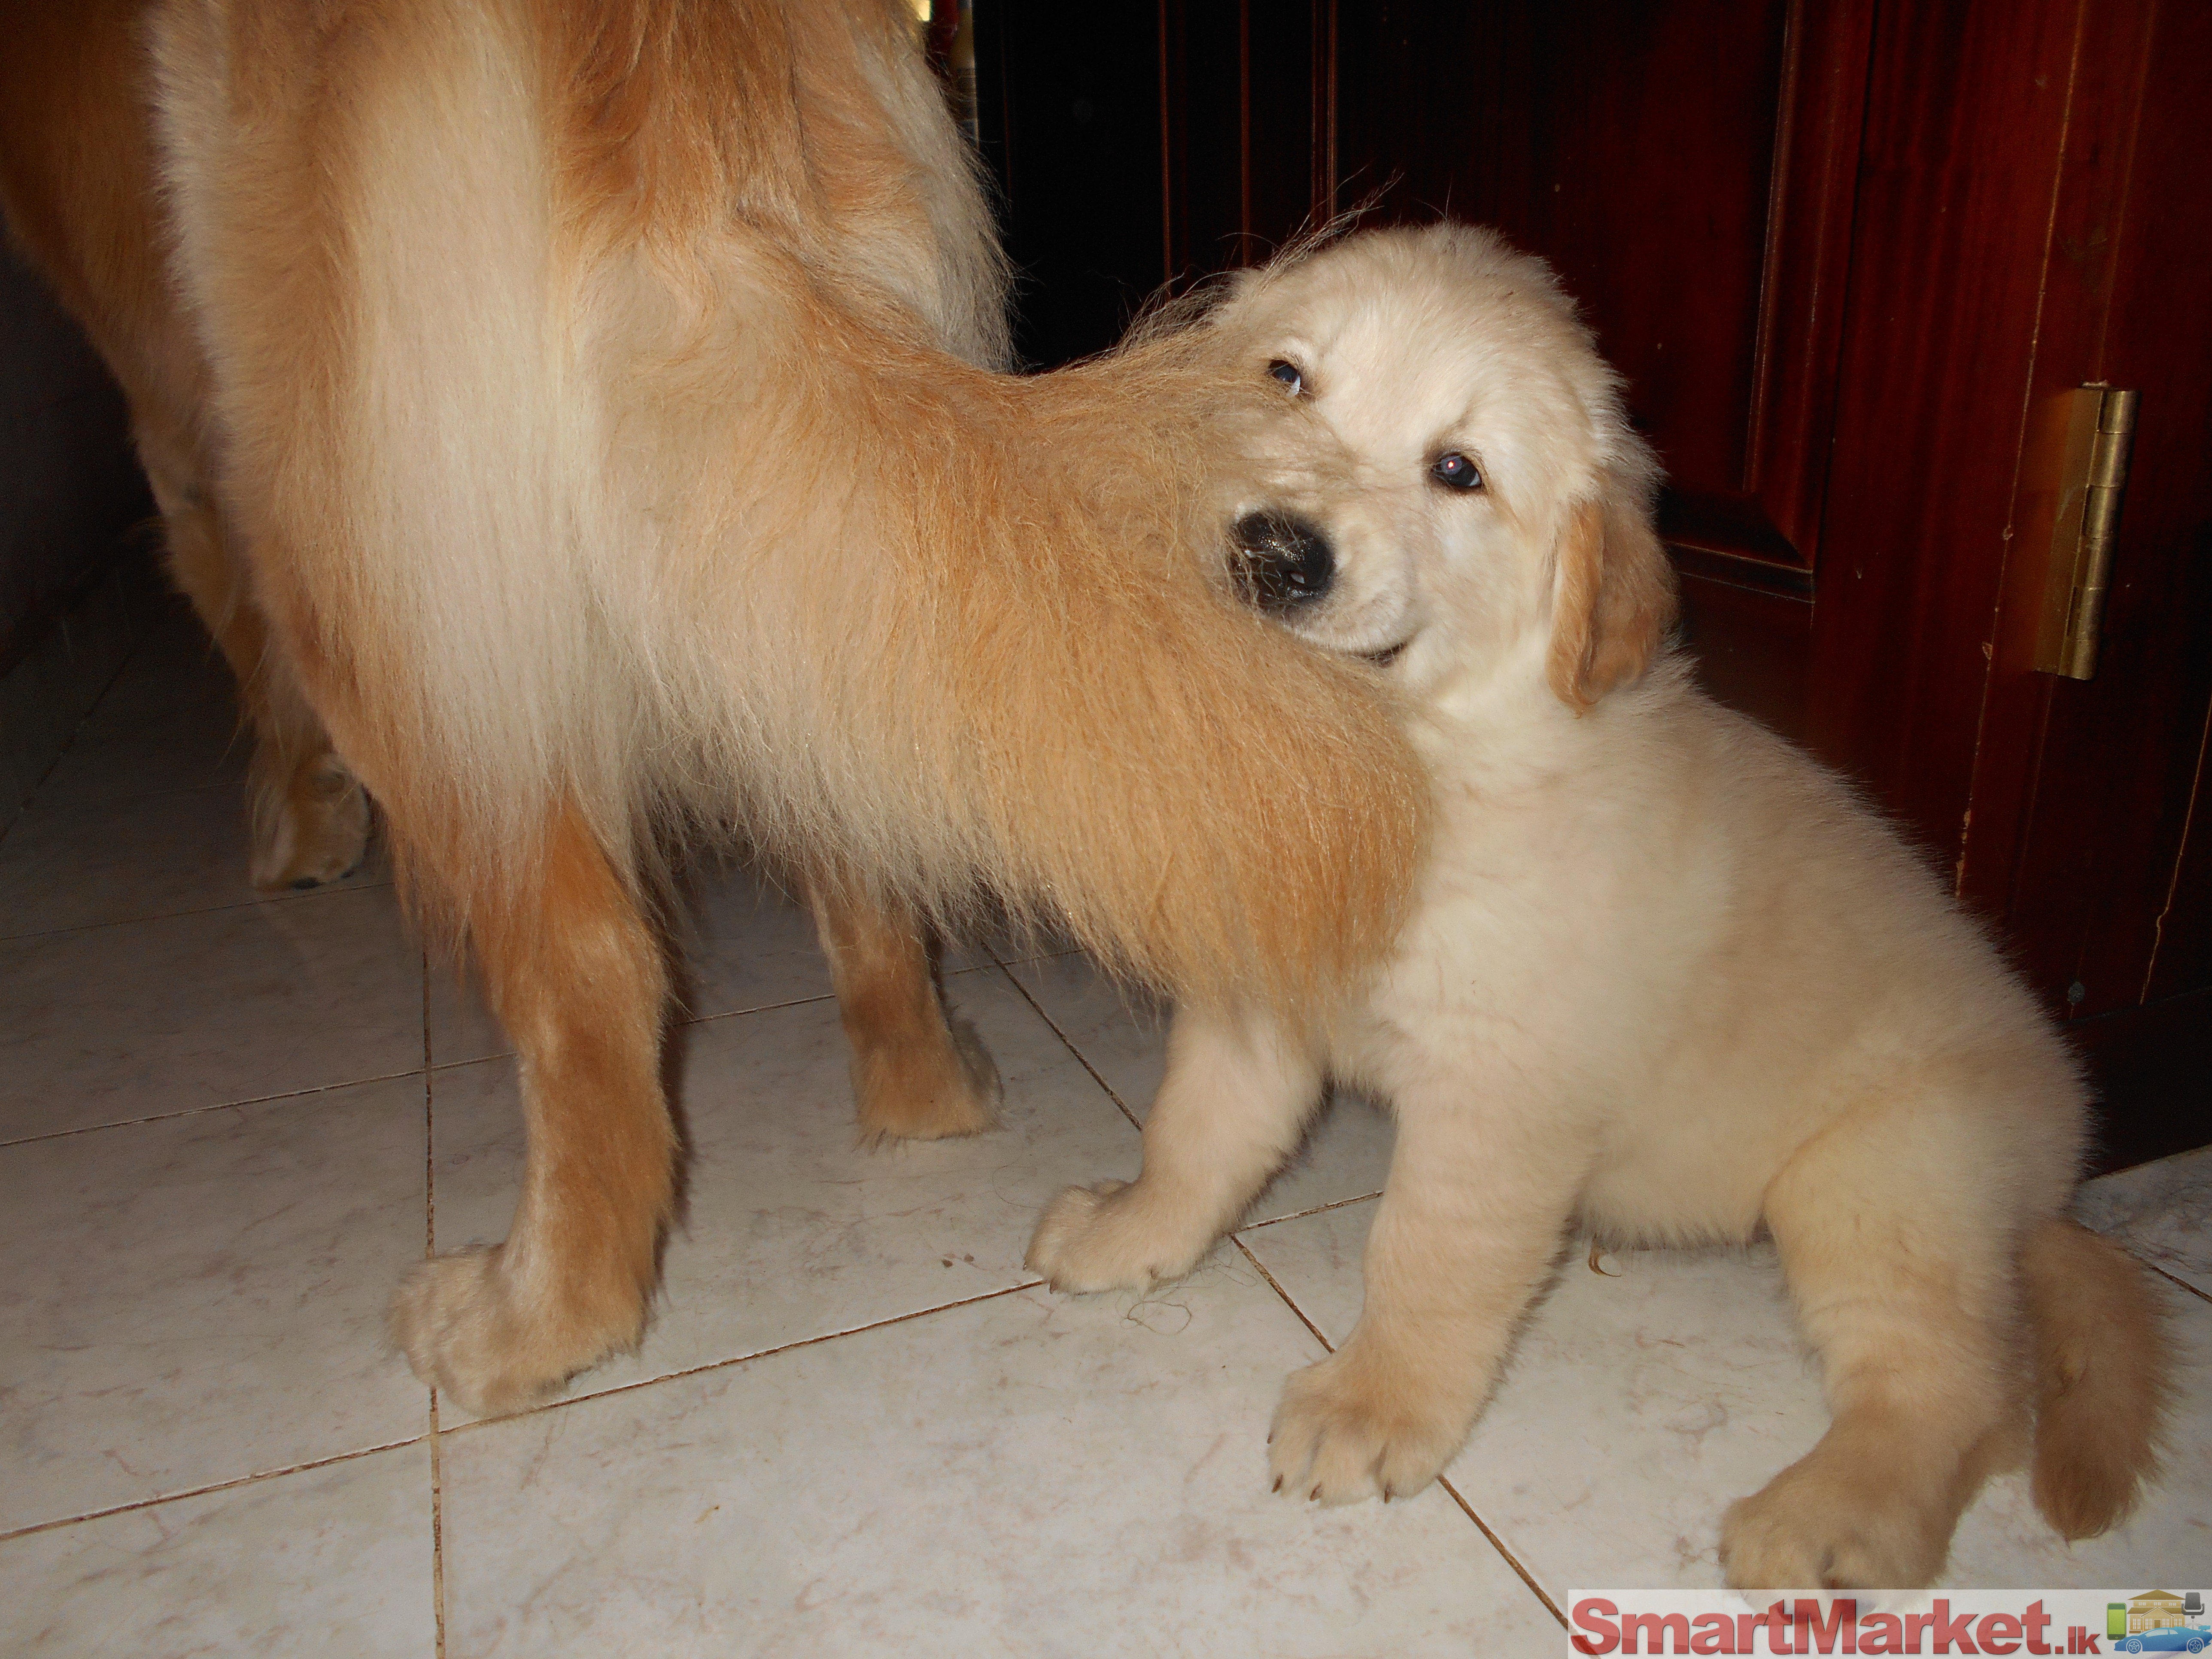 Pure bred Golden Retriever puppy for sale